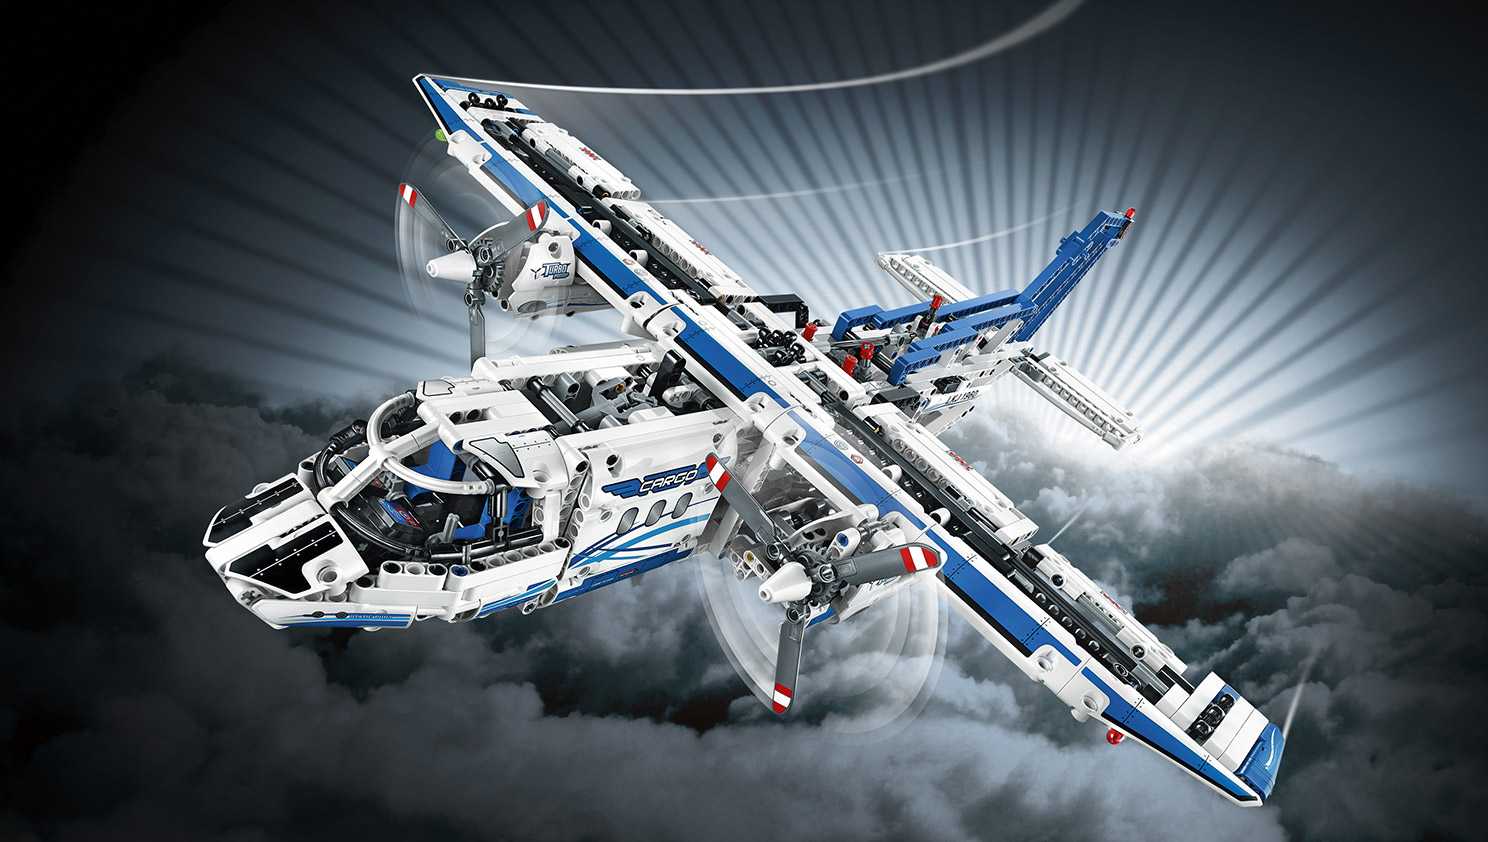 Lego - L'avion cargo